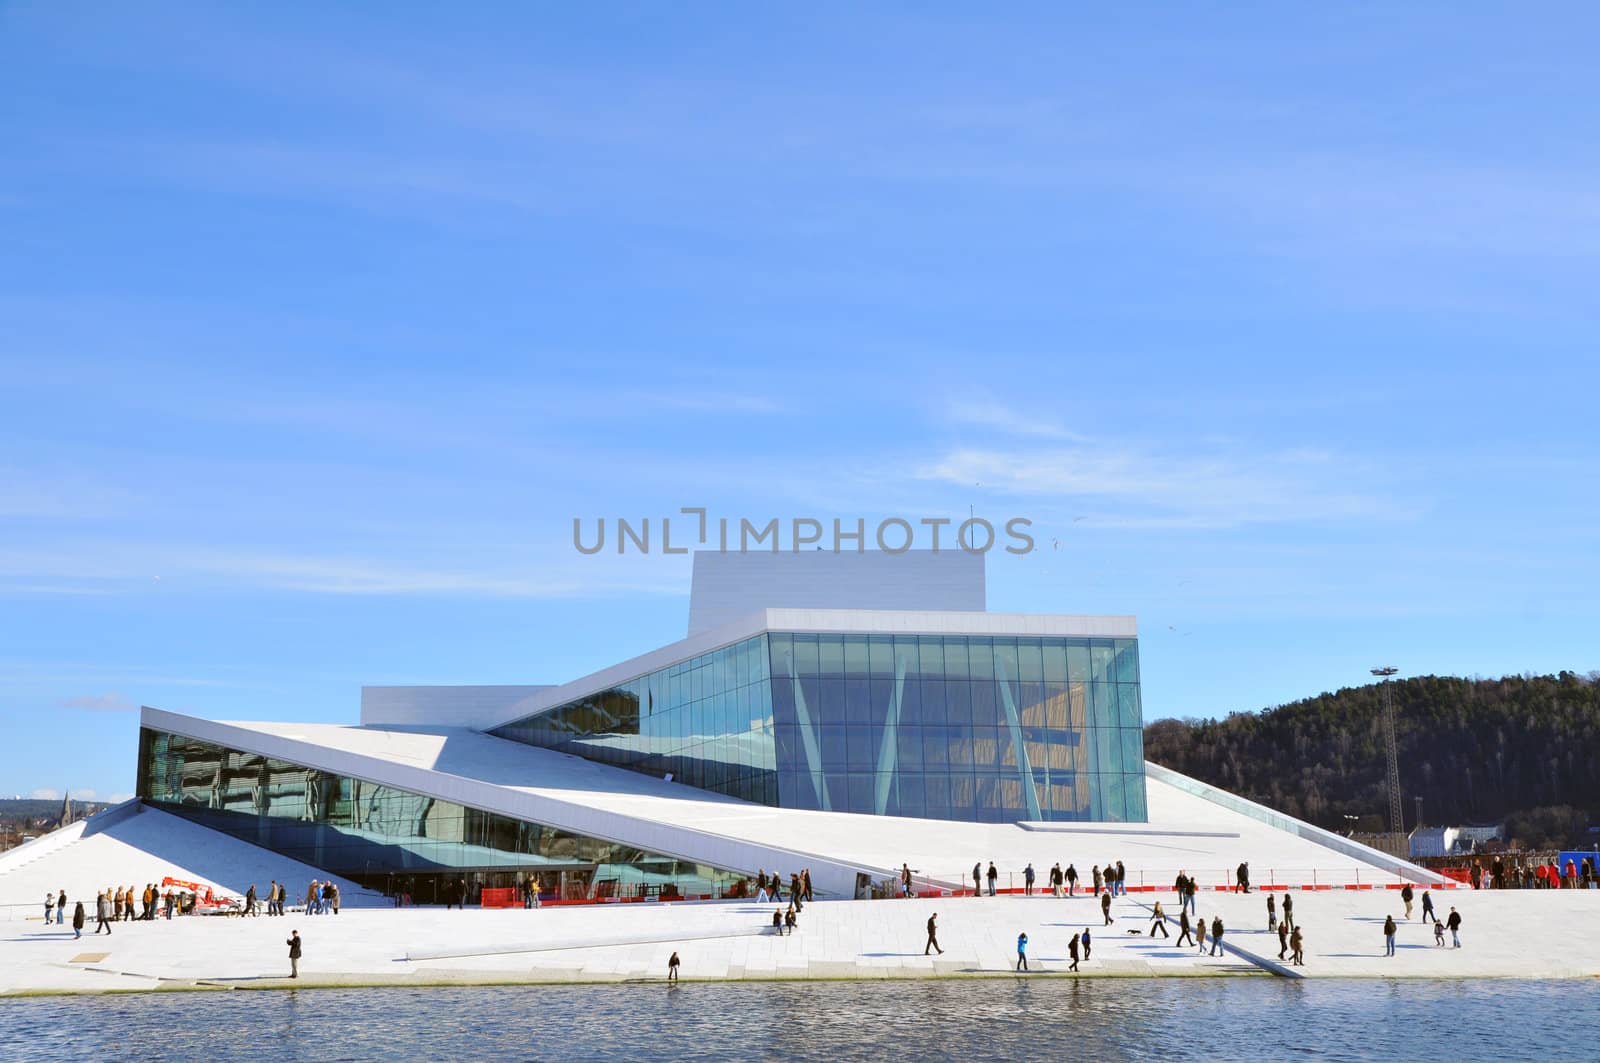 New opera house in Oslo Norway